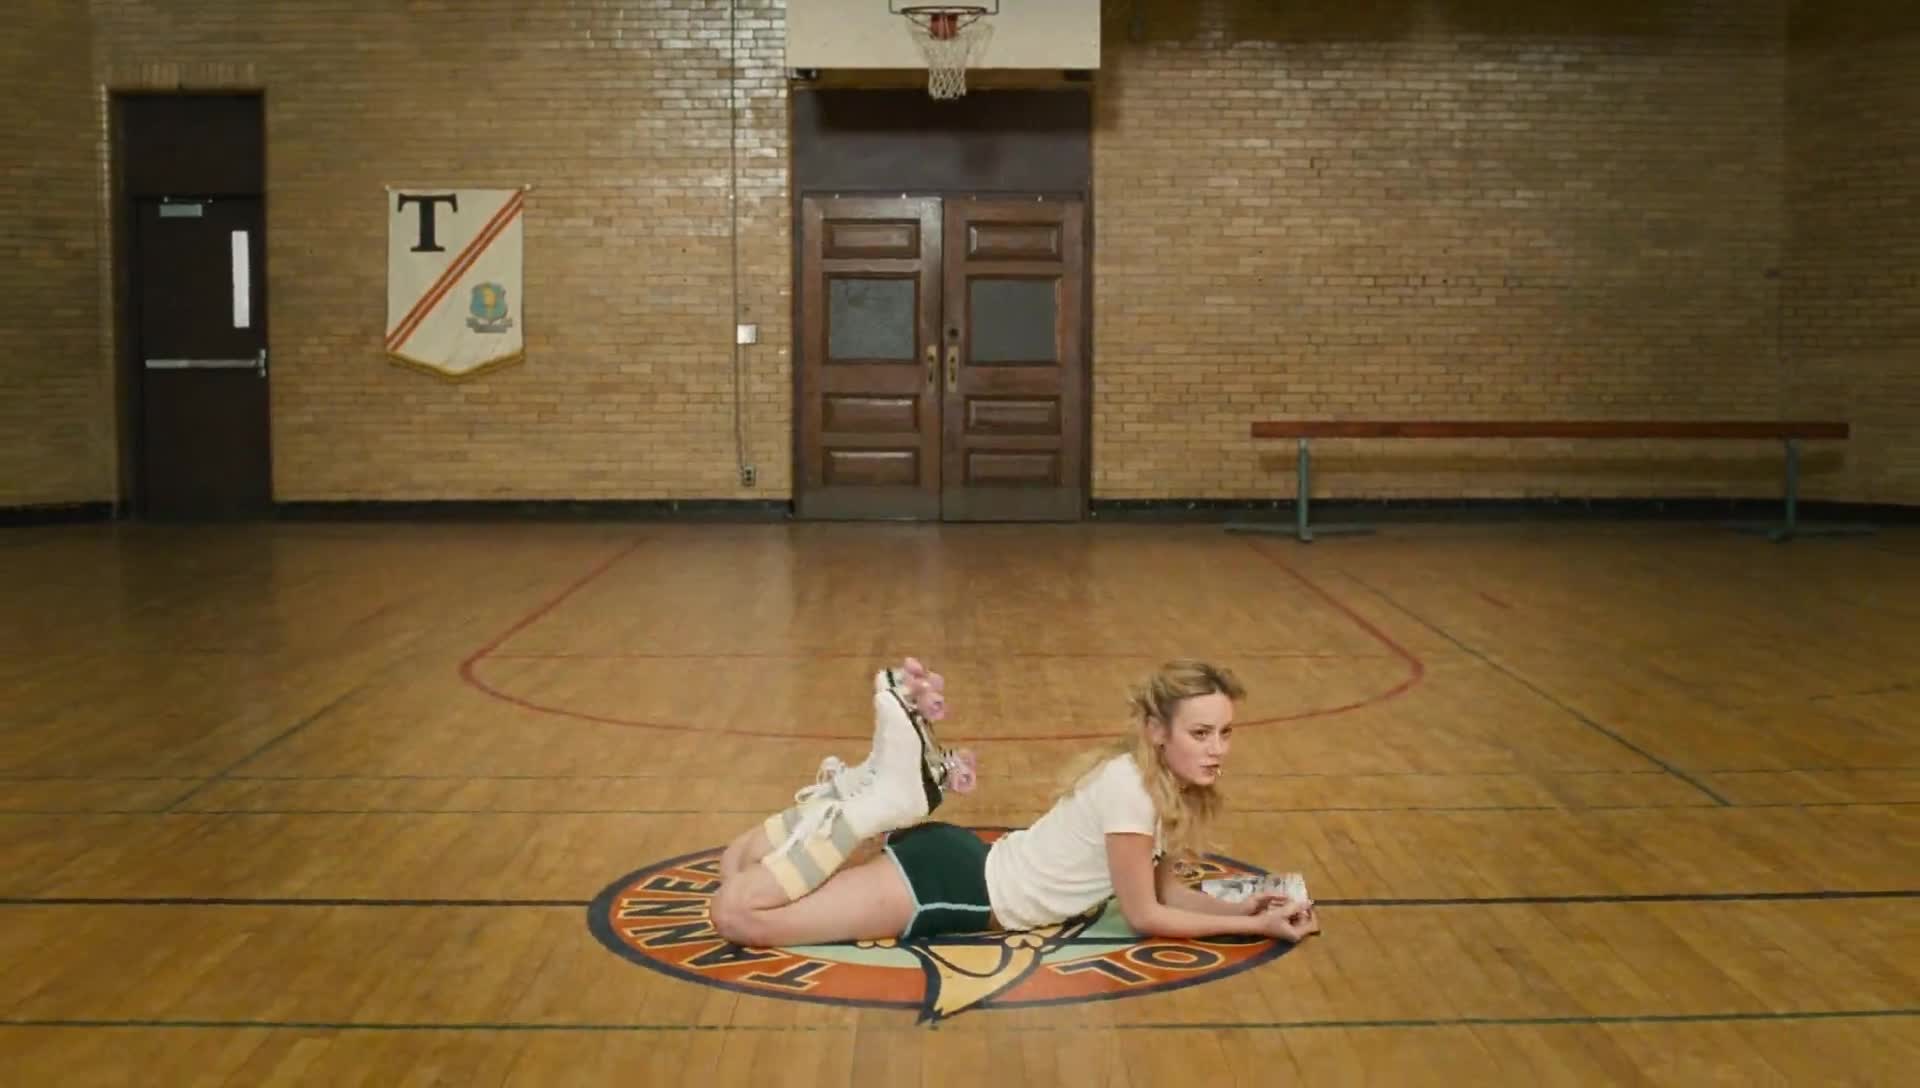 Brie Larson rollerblading scene from Tanner Hall